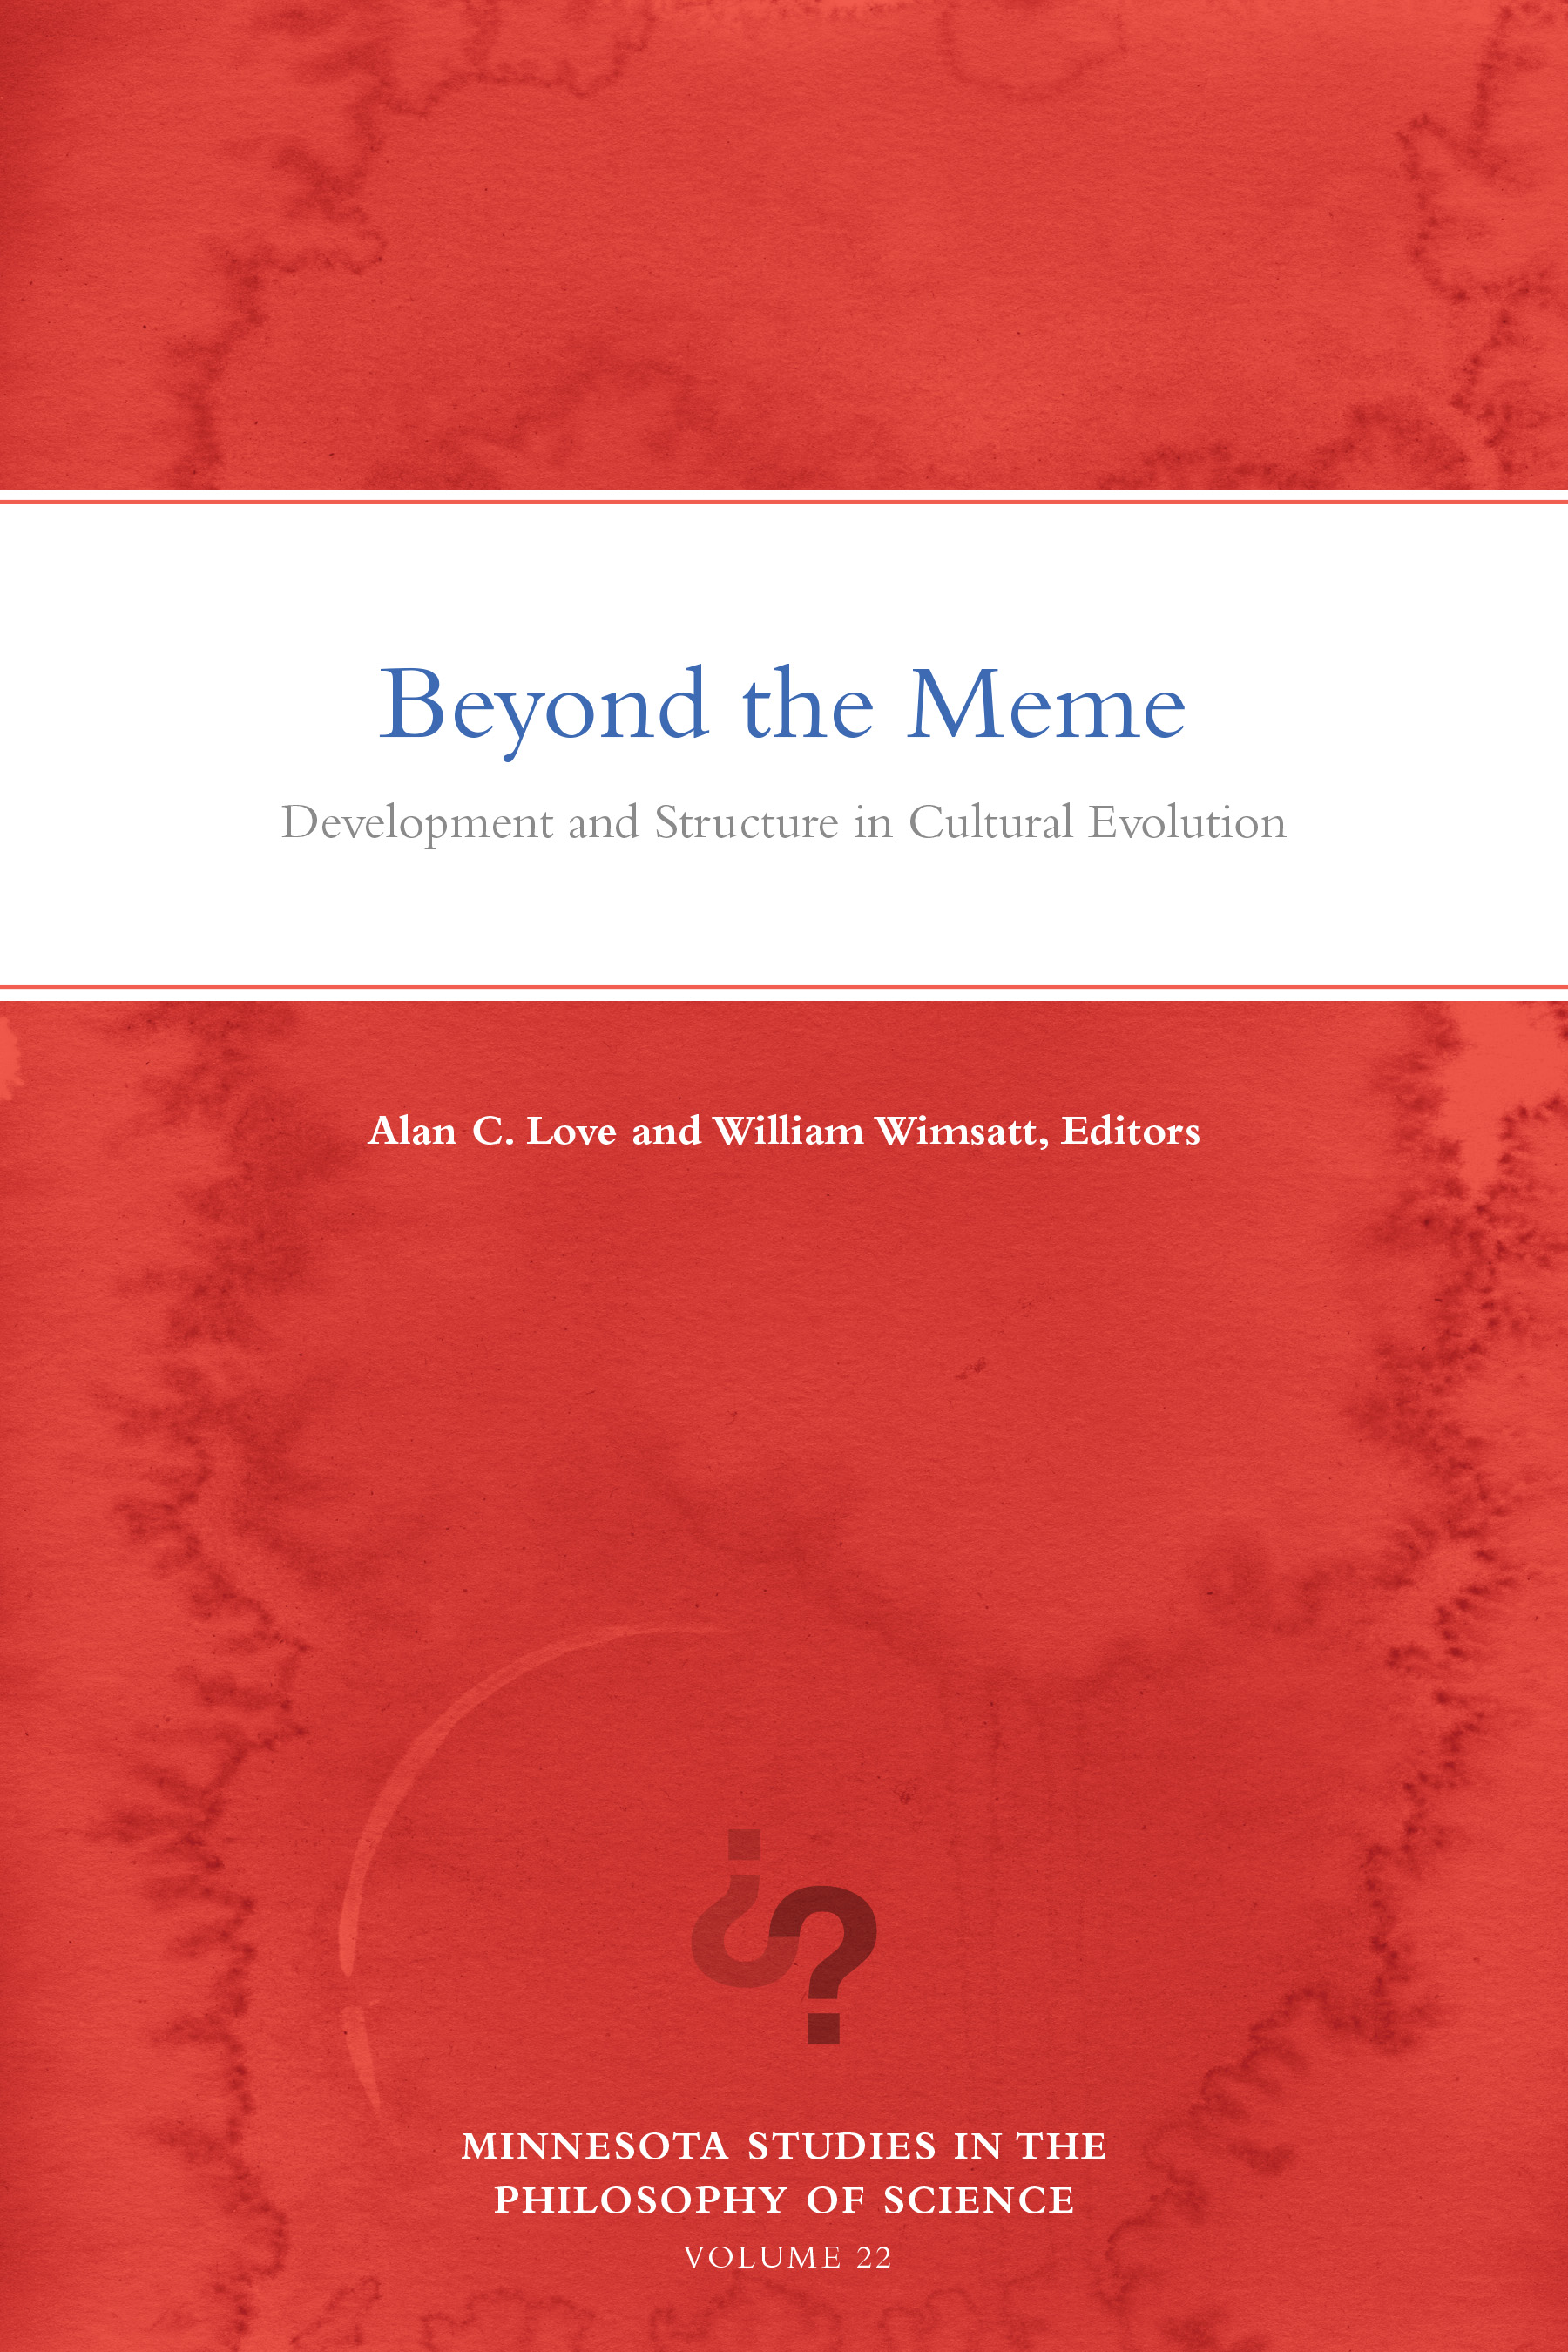 Cover of Minnesota Studies volume 22, Beyond the Meme